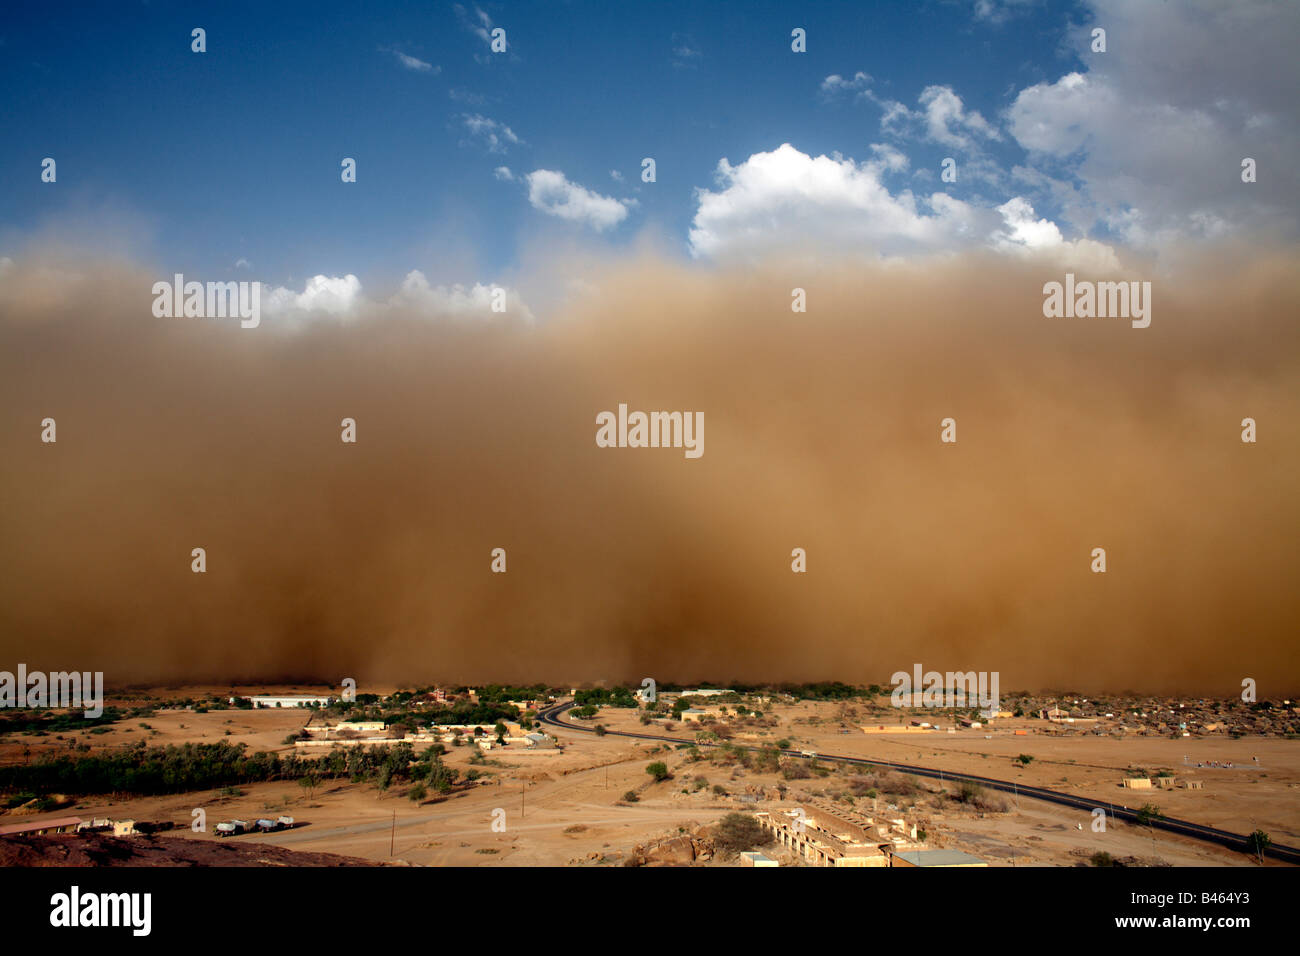 A sandstorm is seen in Eritrea near the Sudanese border. Stock Photo